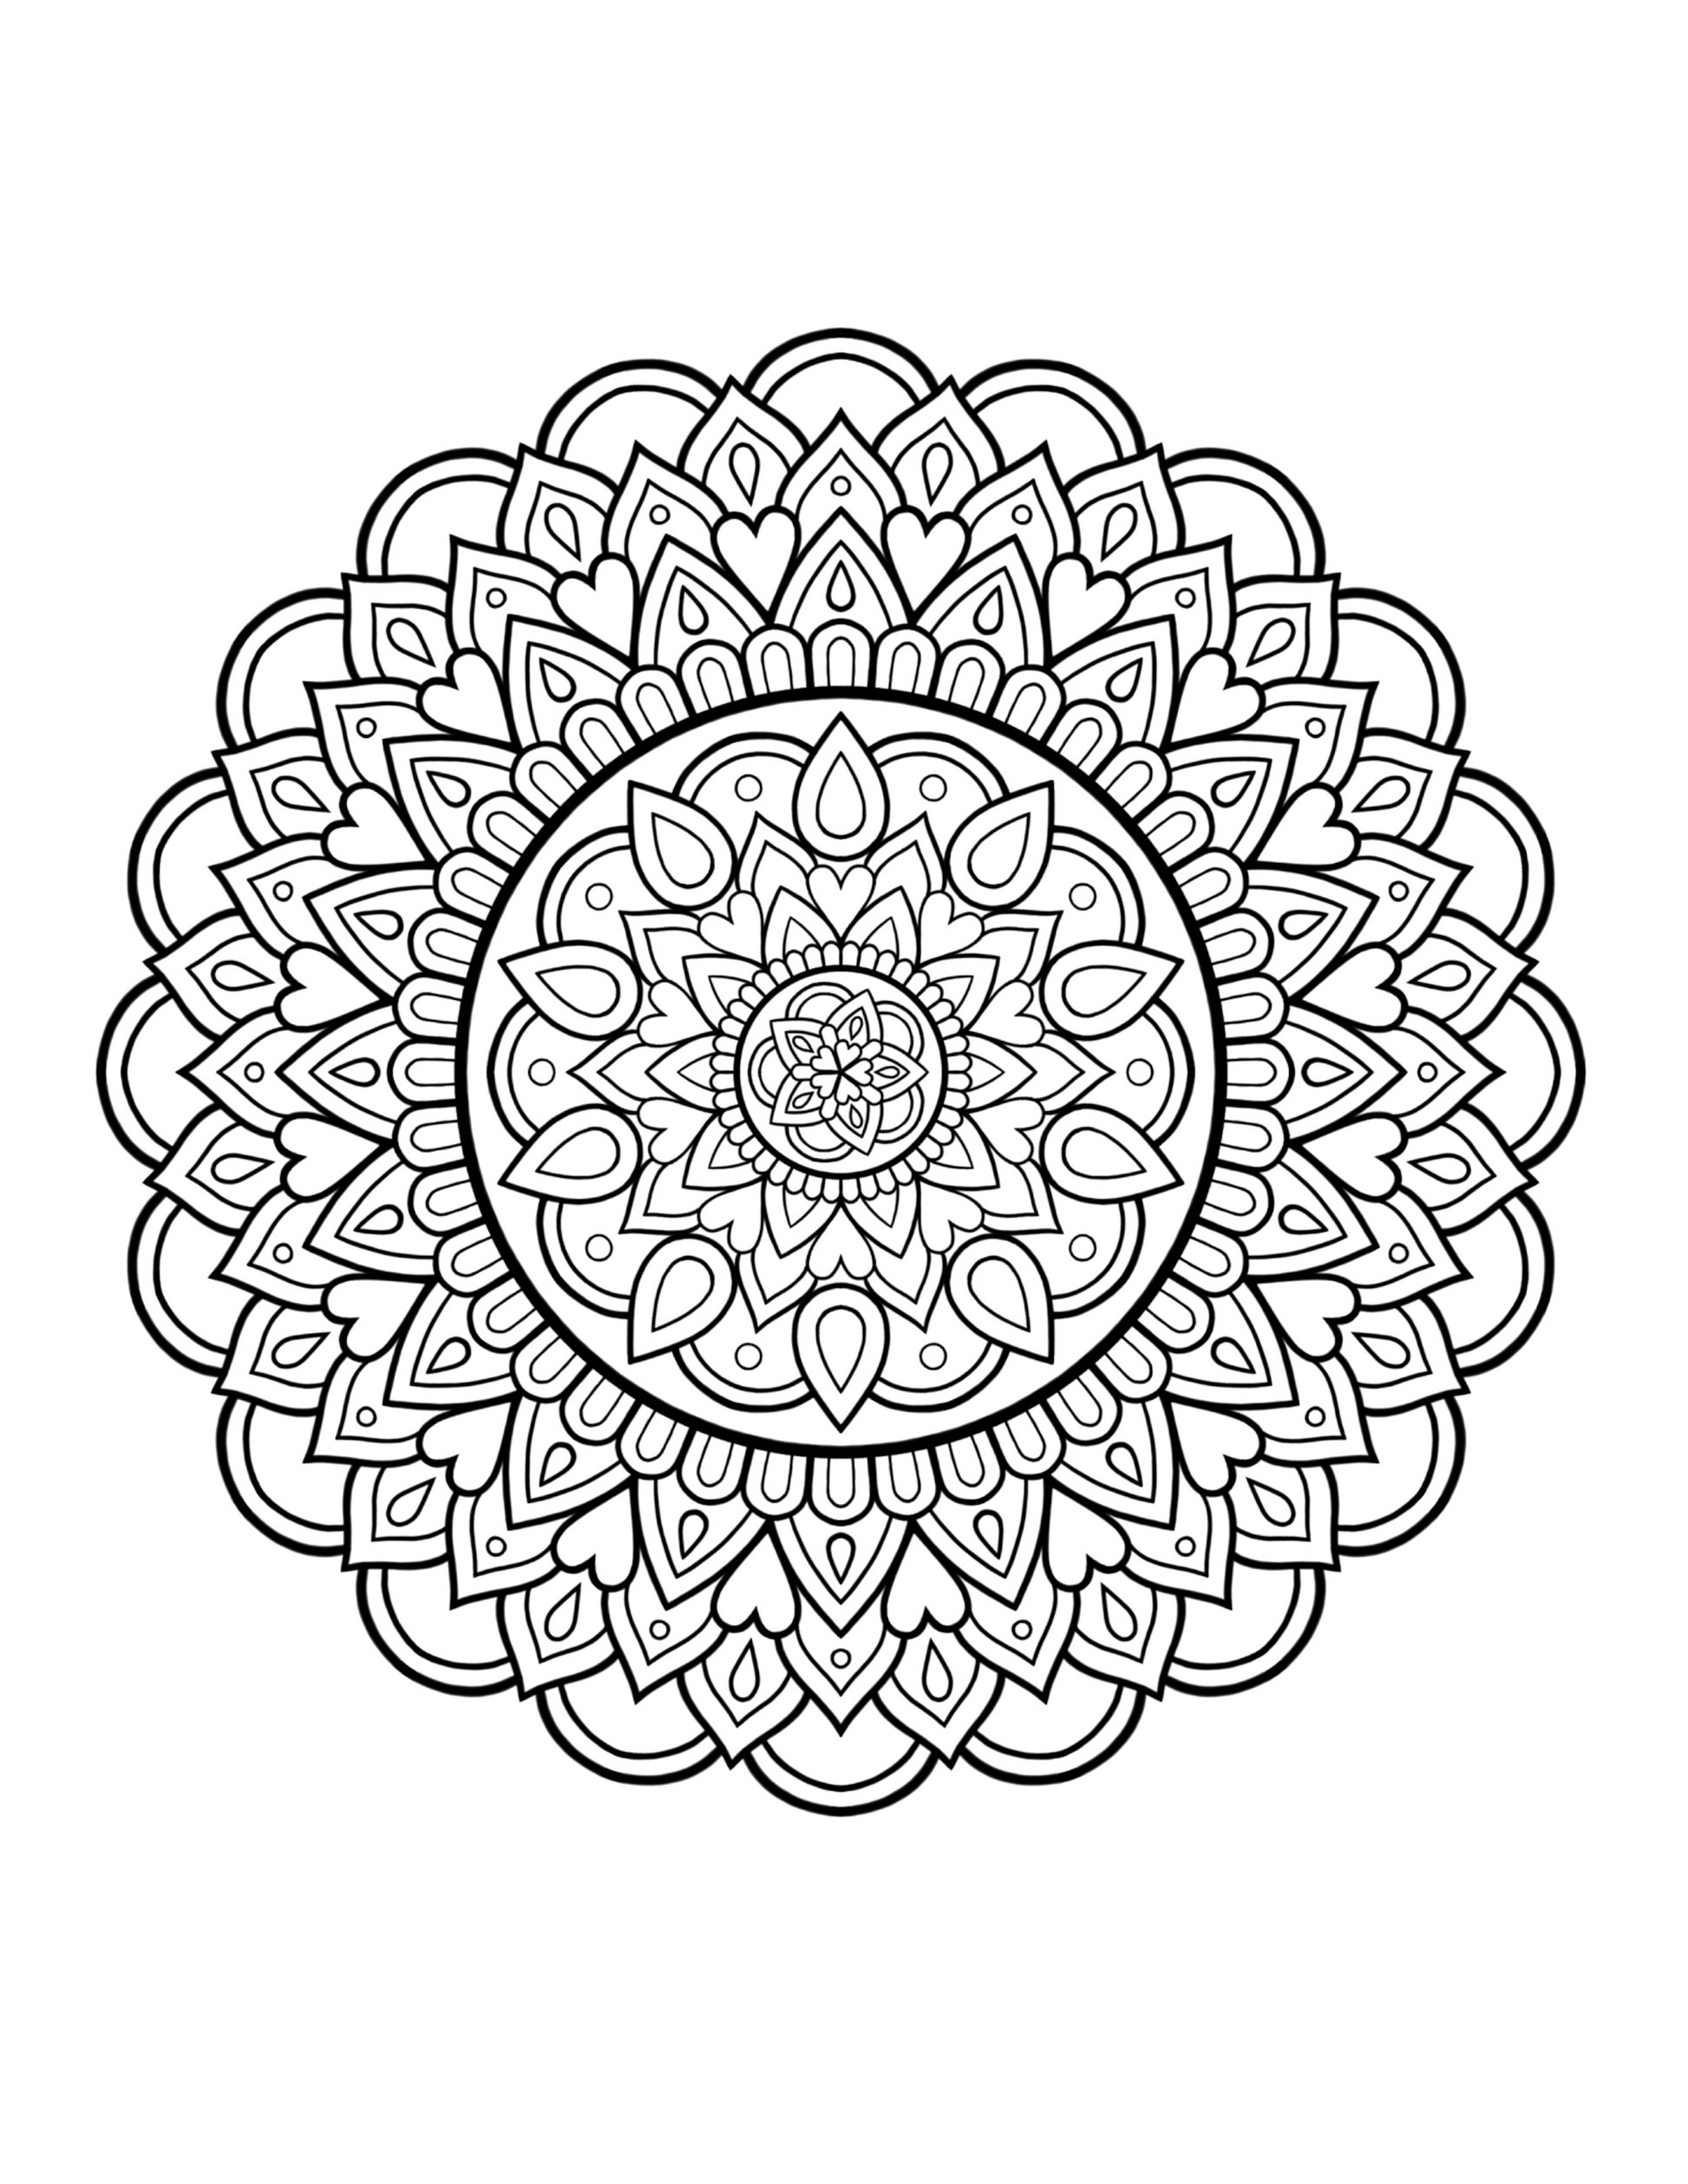 Mandala coloring book pdf â saudamini madra designs